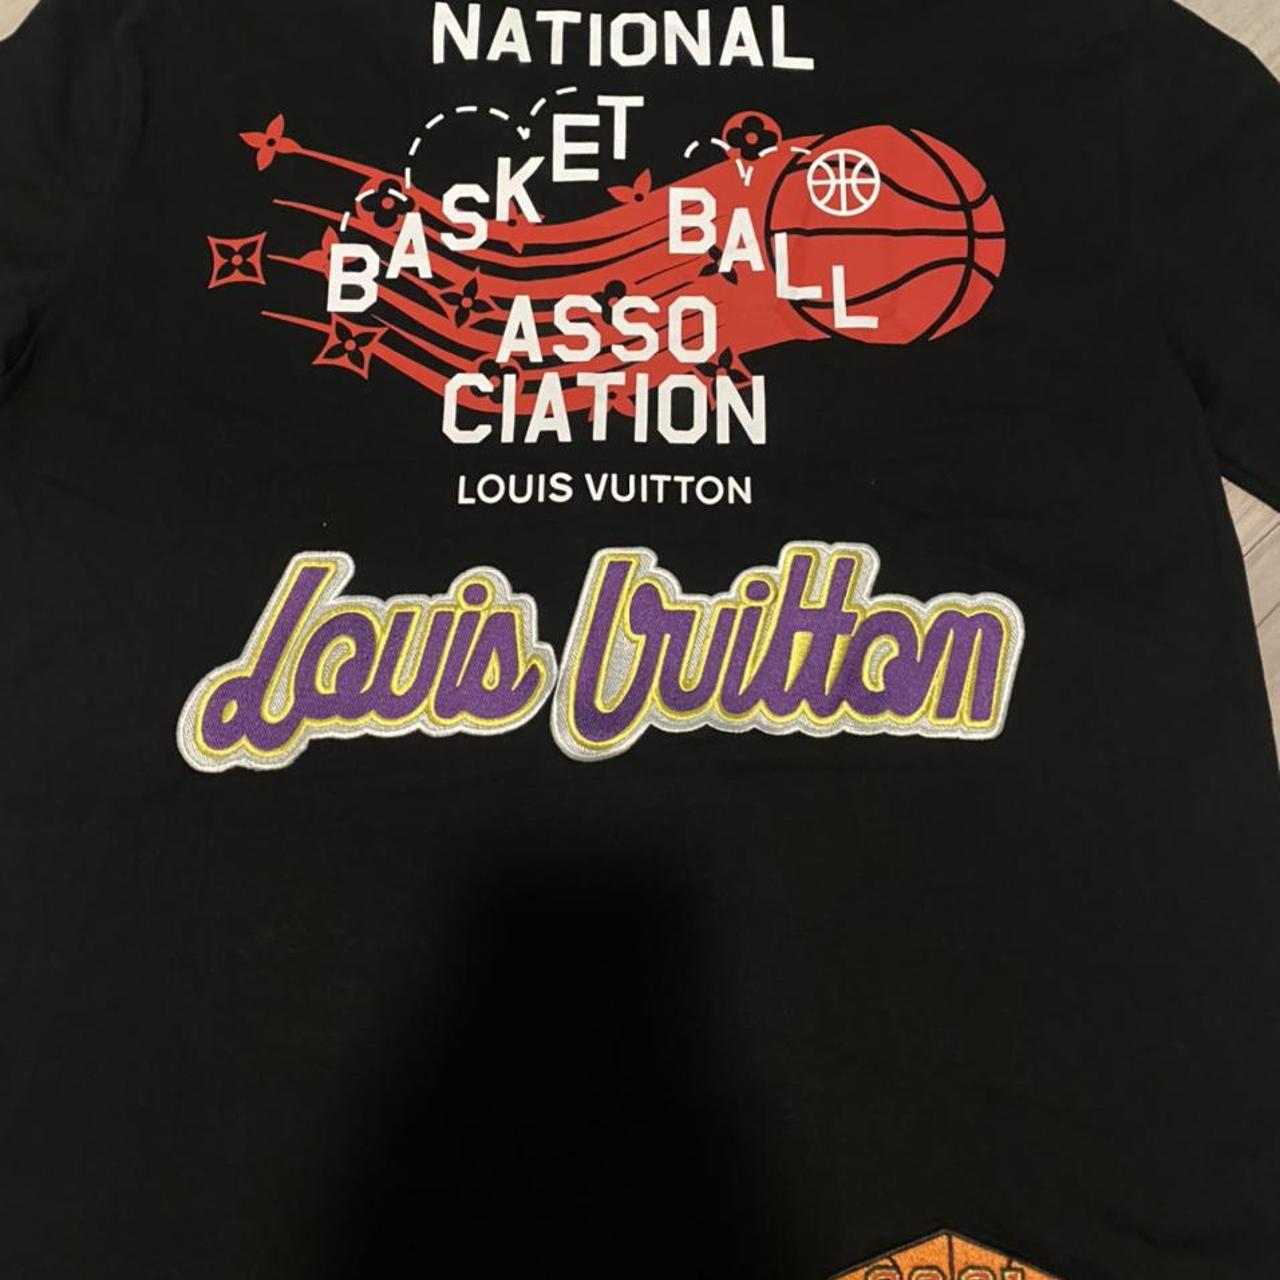 Serious collectors piece Louis Vuitton X NBA - crazy rare T-shirt souc